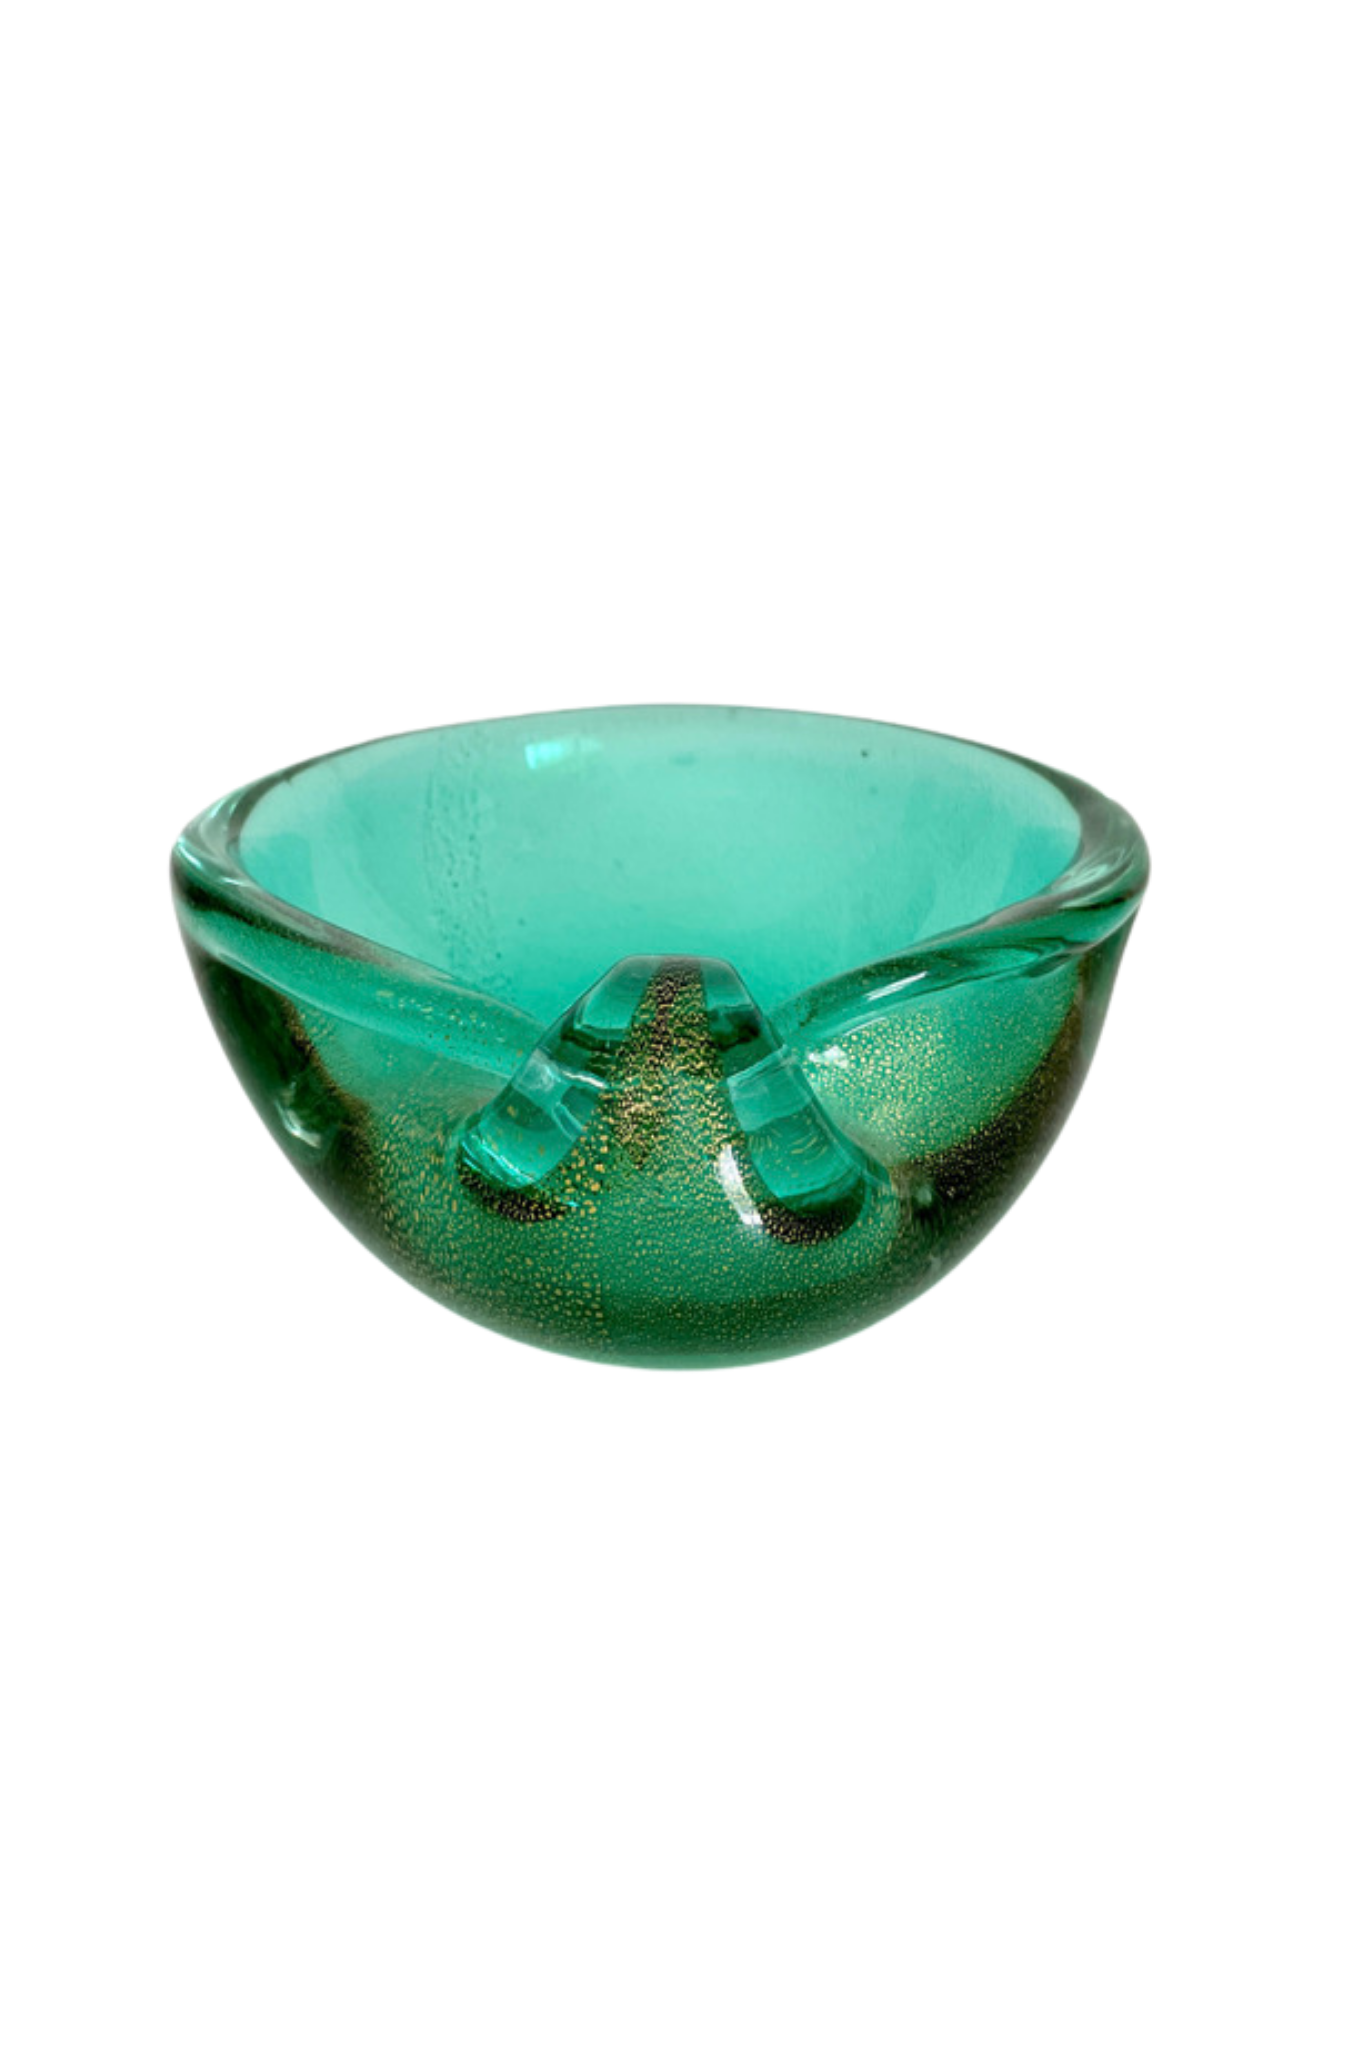 Shell Form Murano Glass Dish